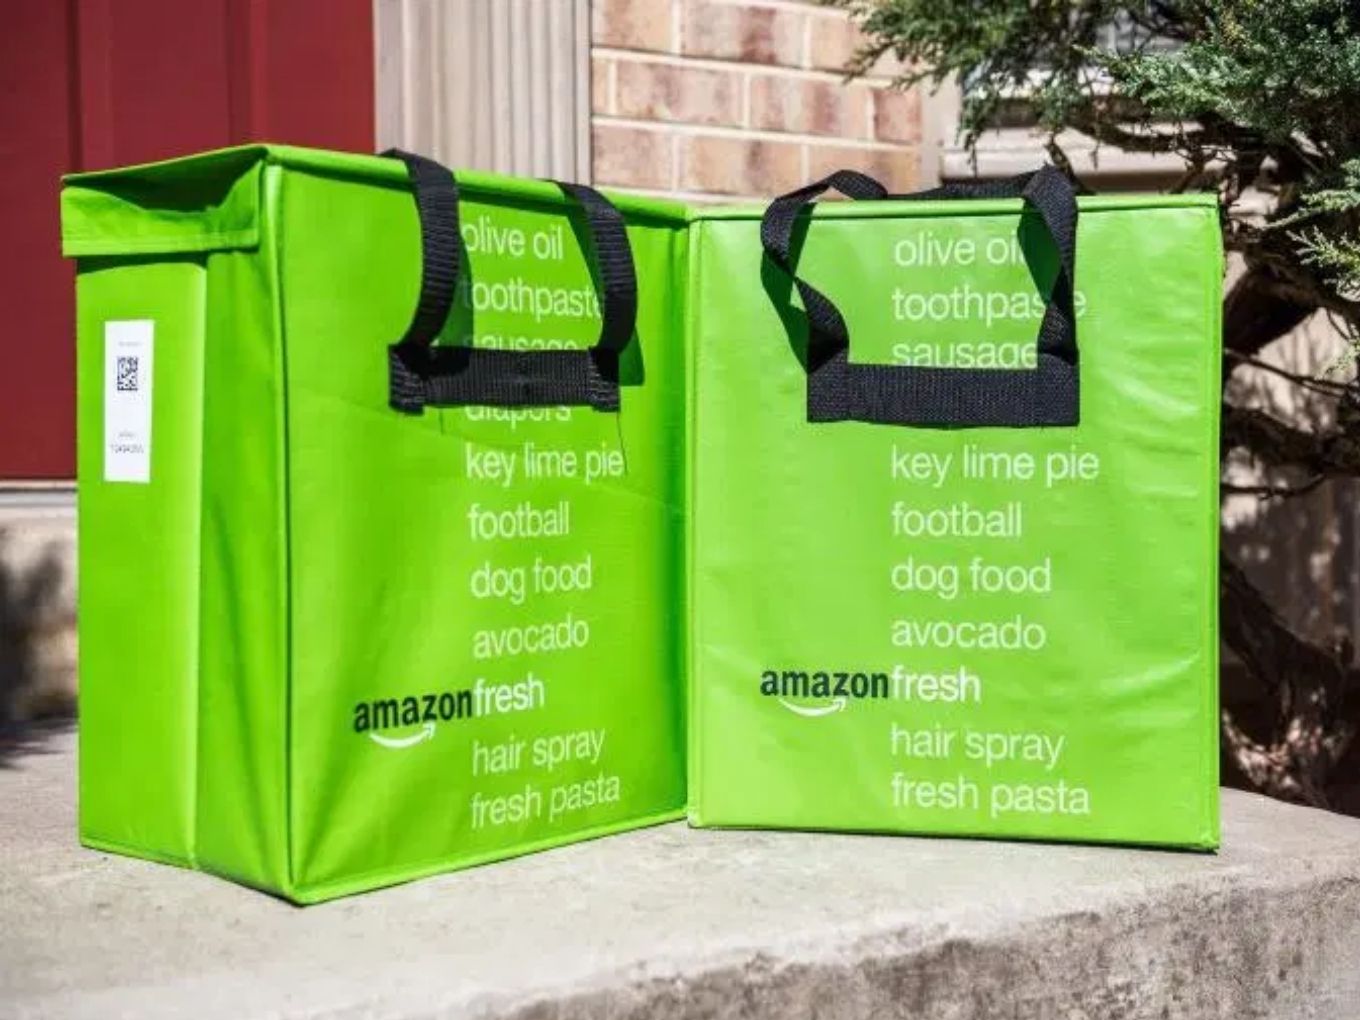 Amazon Cancels Non-Priority Orders To Deliver Essentials Amid Lockdown